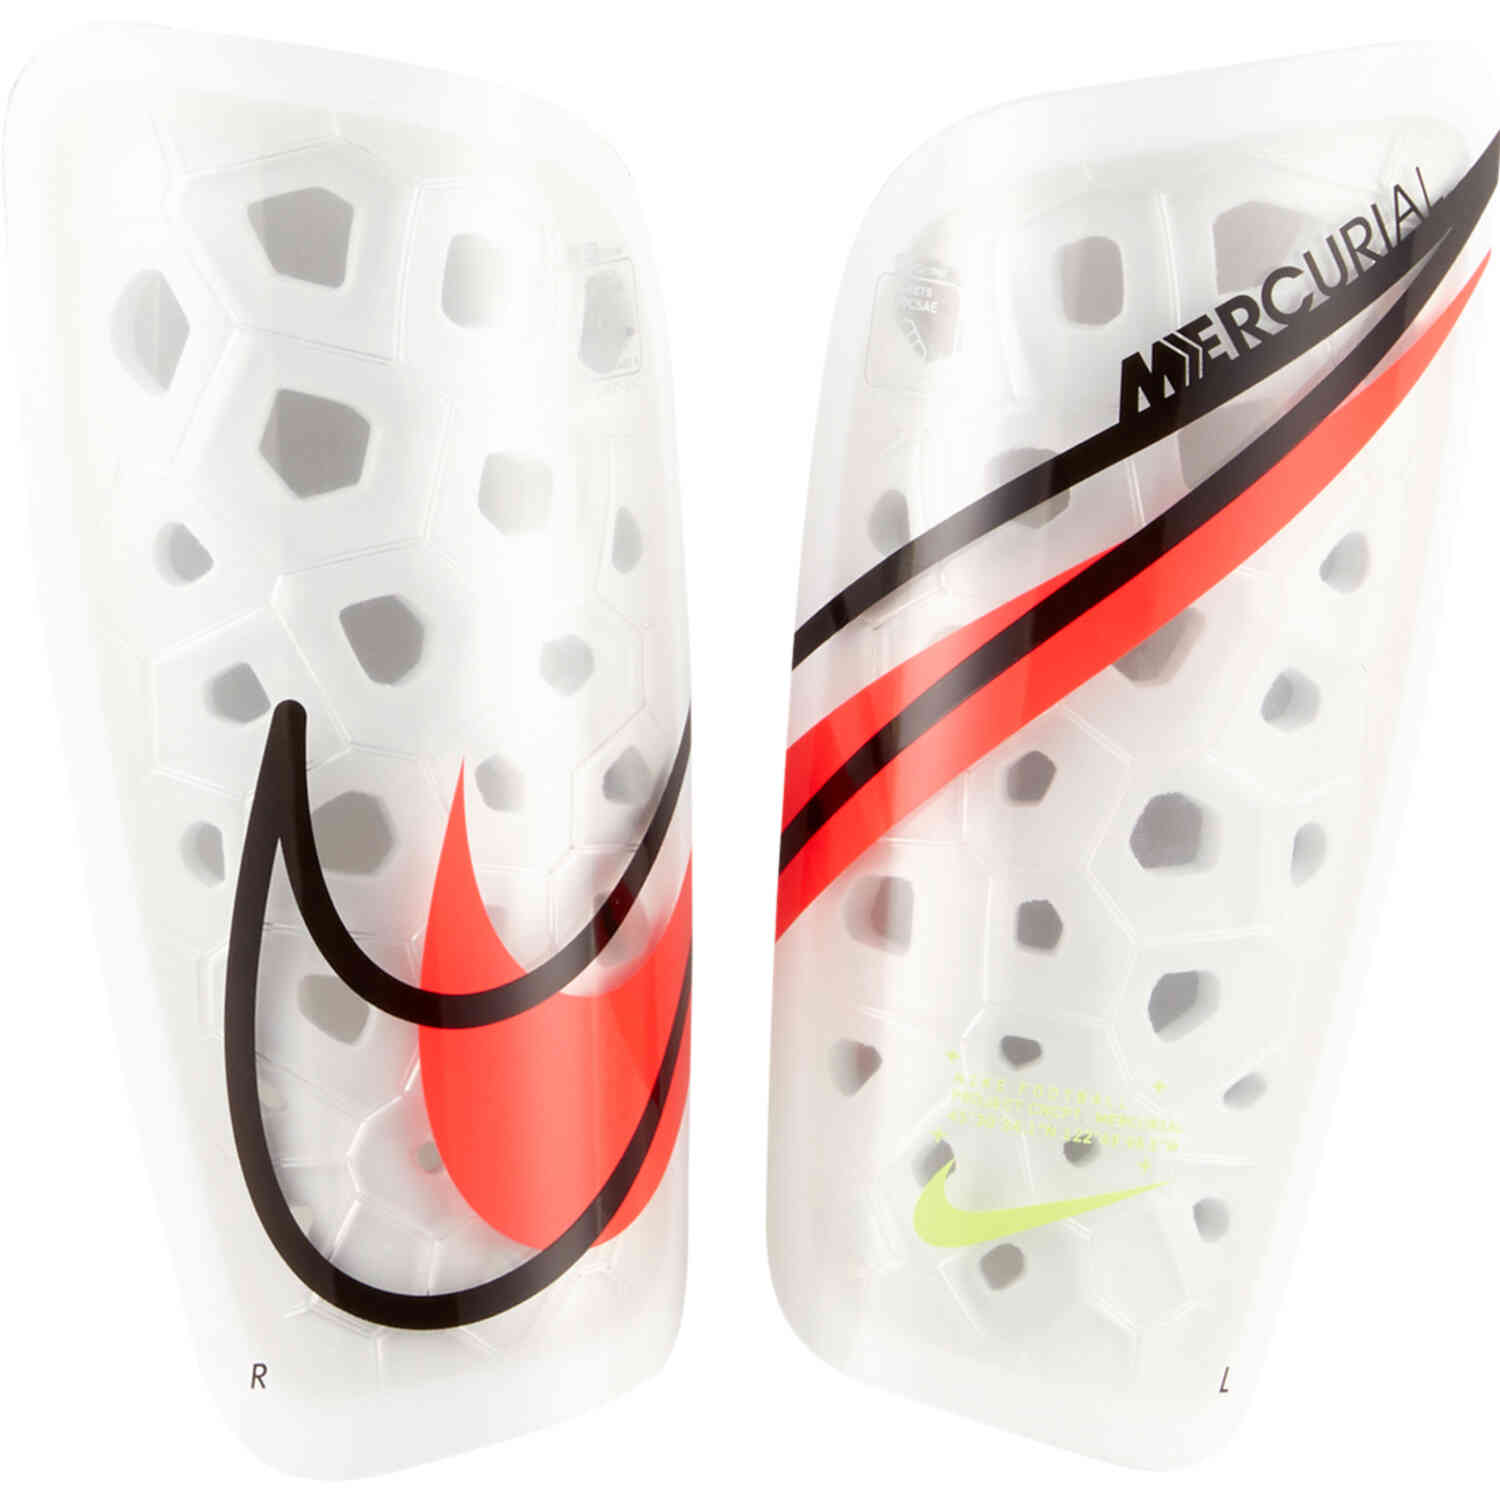 Protège-Tibia Nike Mercurial Lite colore Noir blanc - Nike 